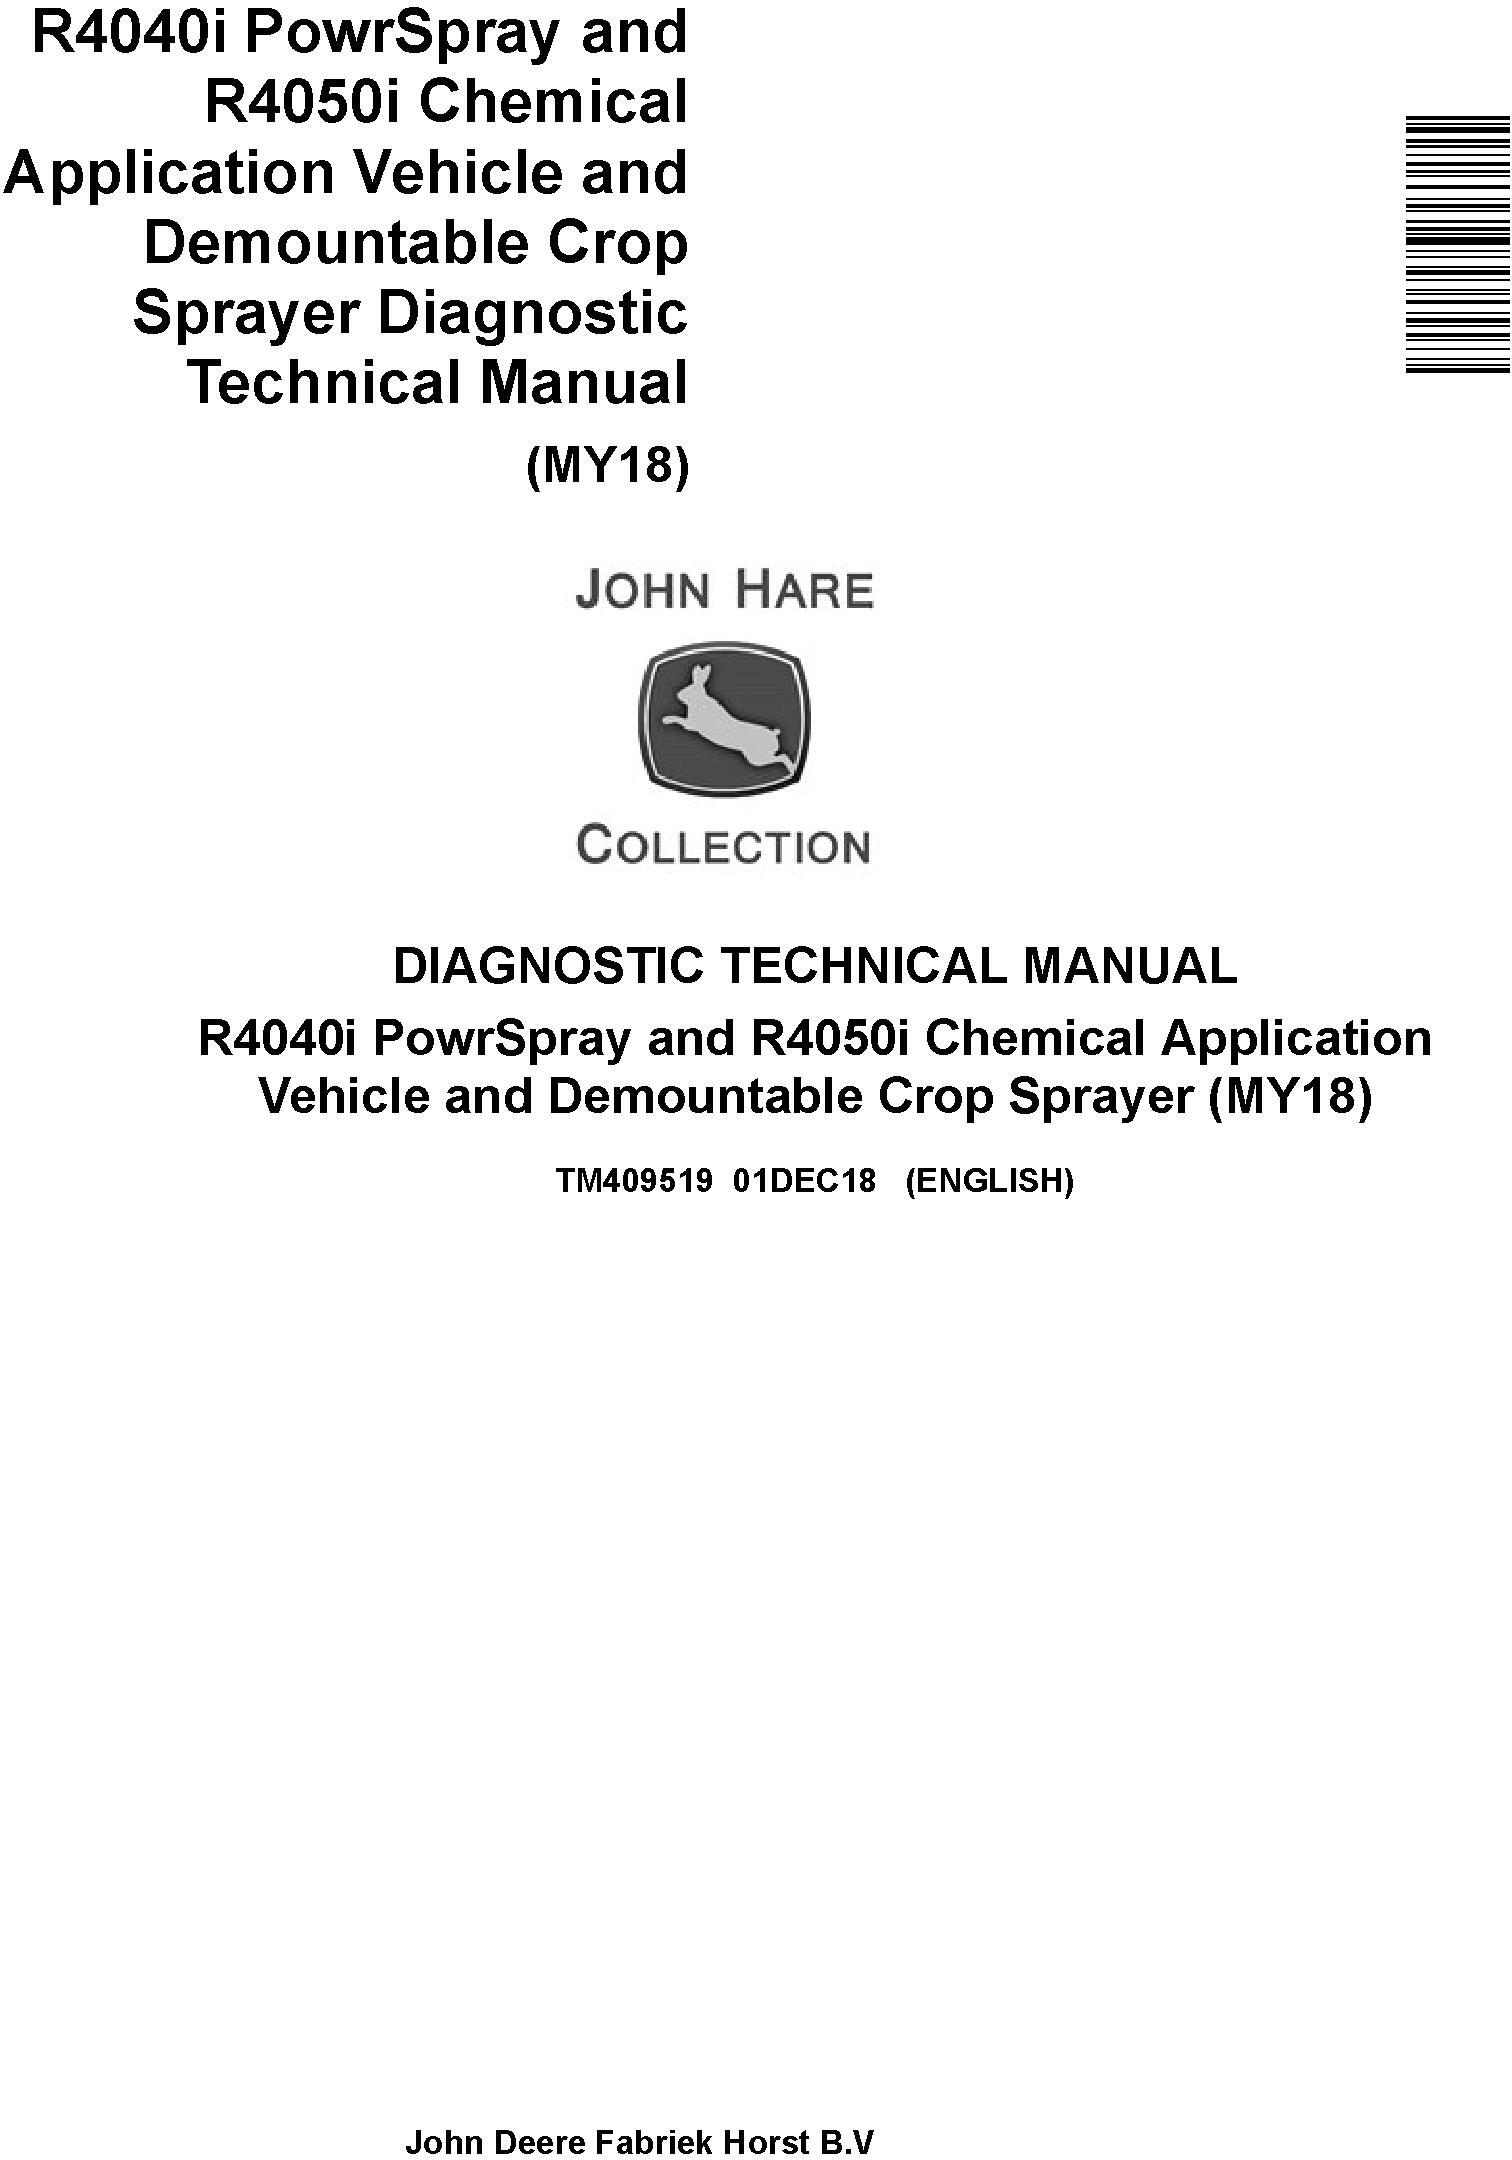 John Deere R4040i R4050i Sprayer Diagnostic Technical Manual TM409519